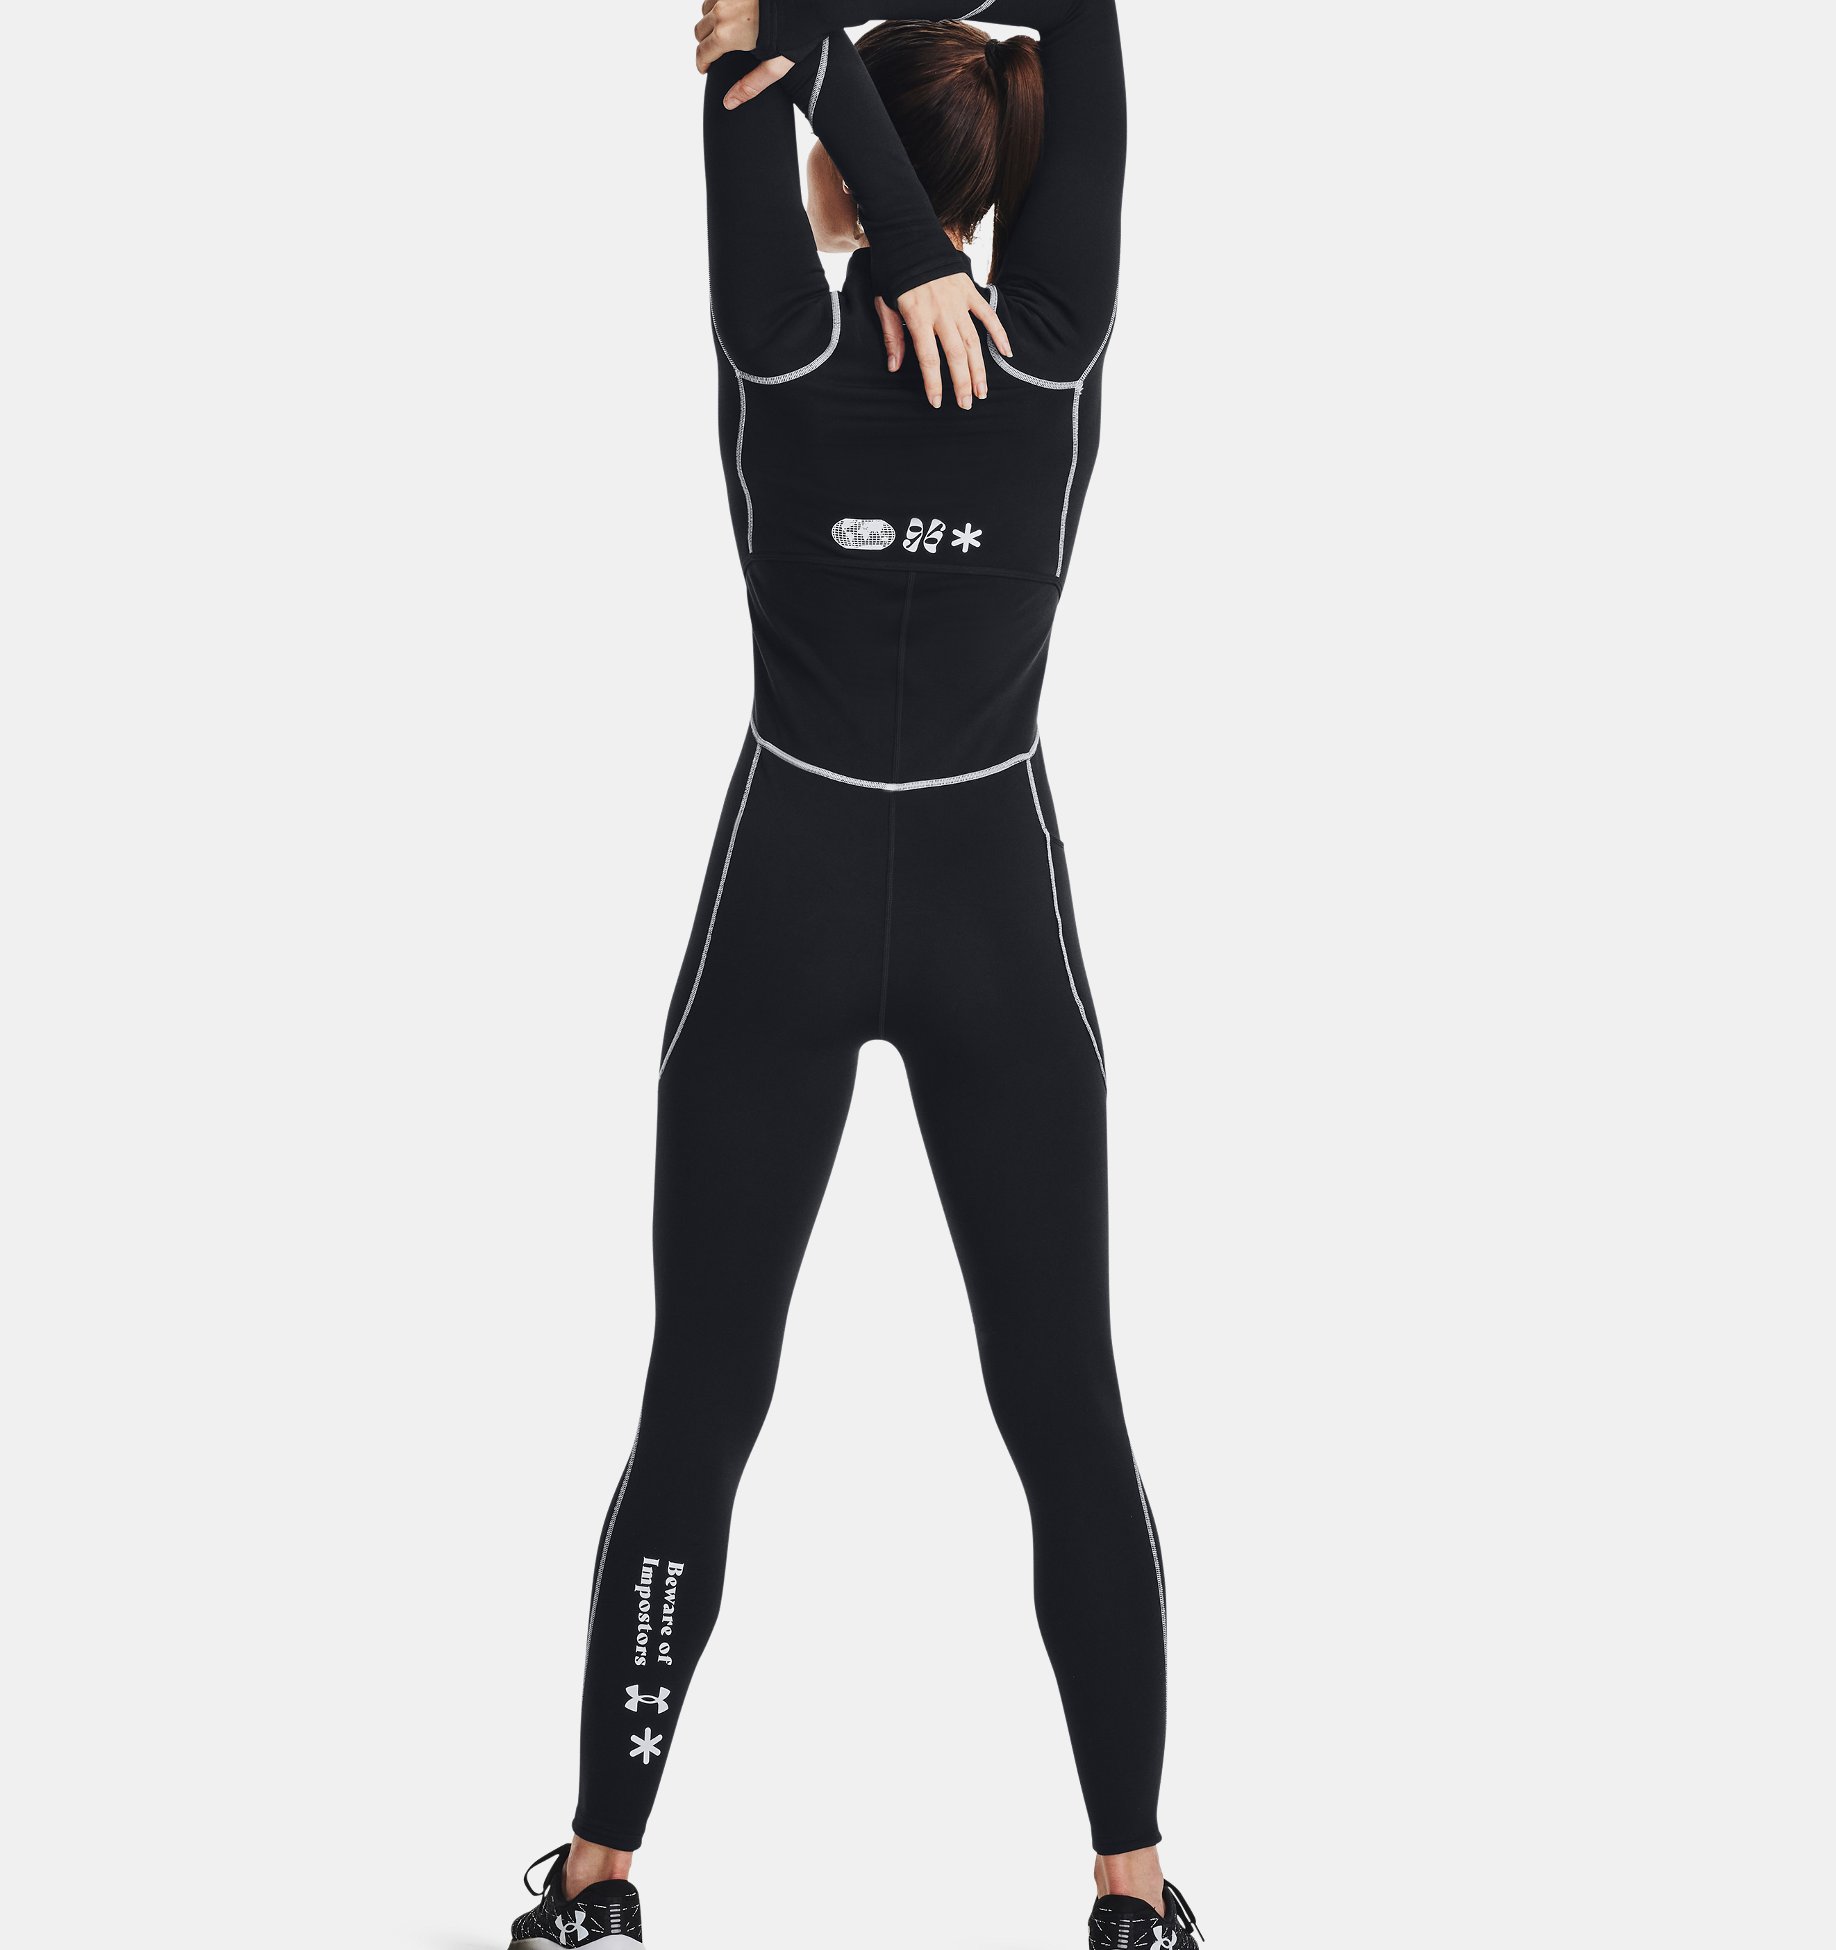 Women's ColdGear® Select Bodysuit